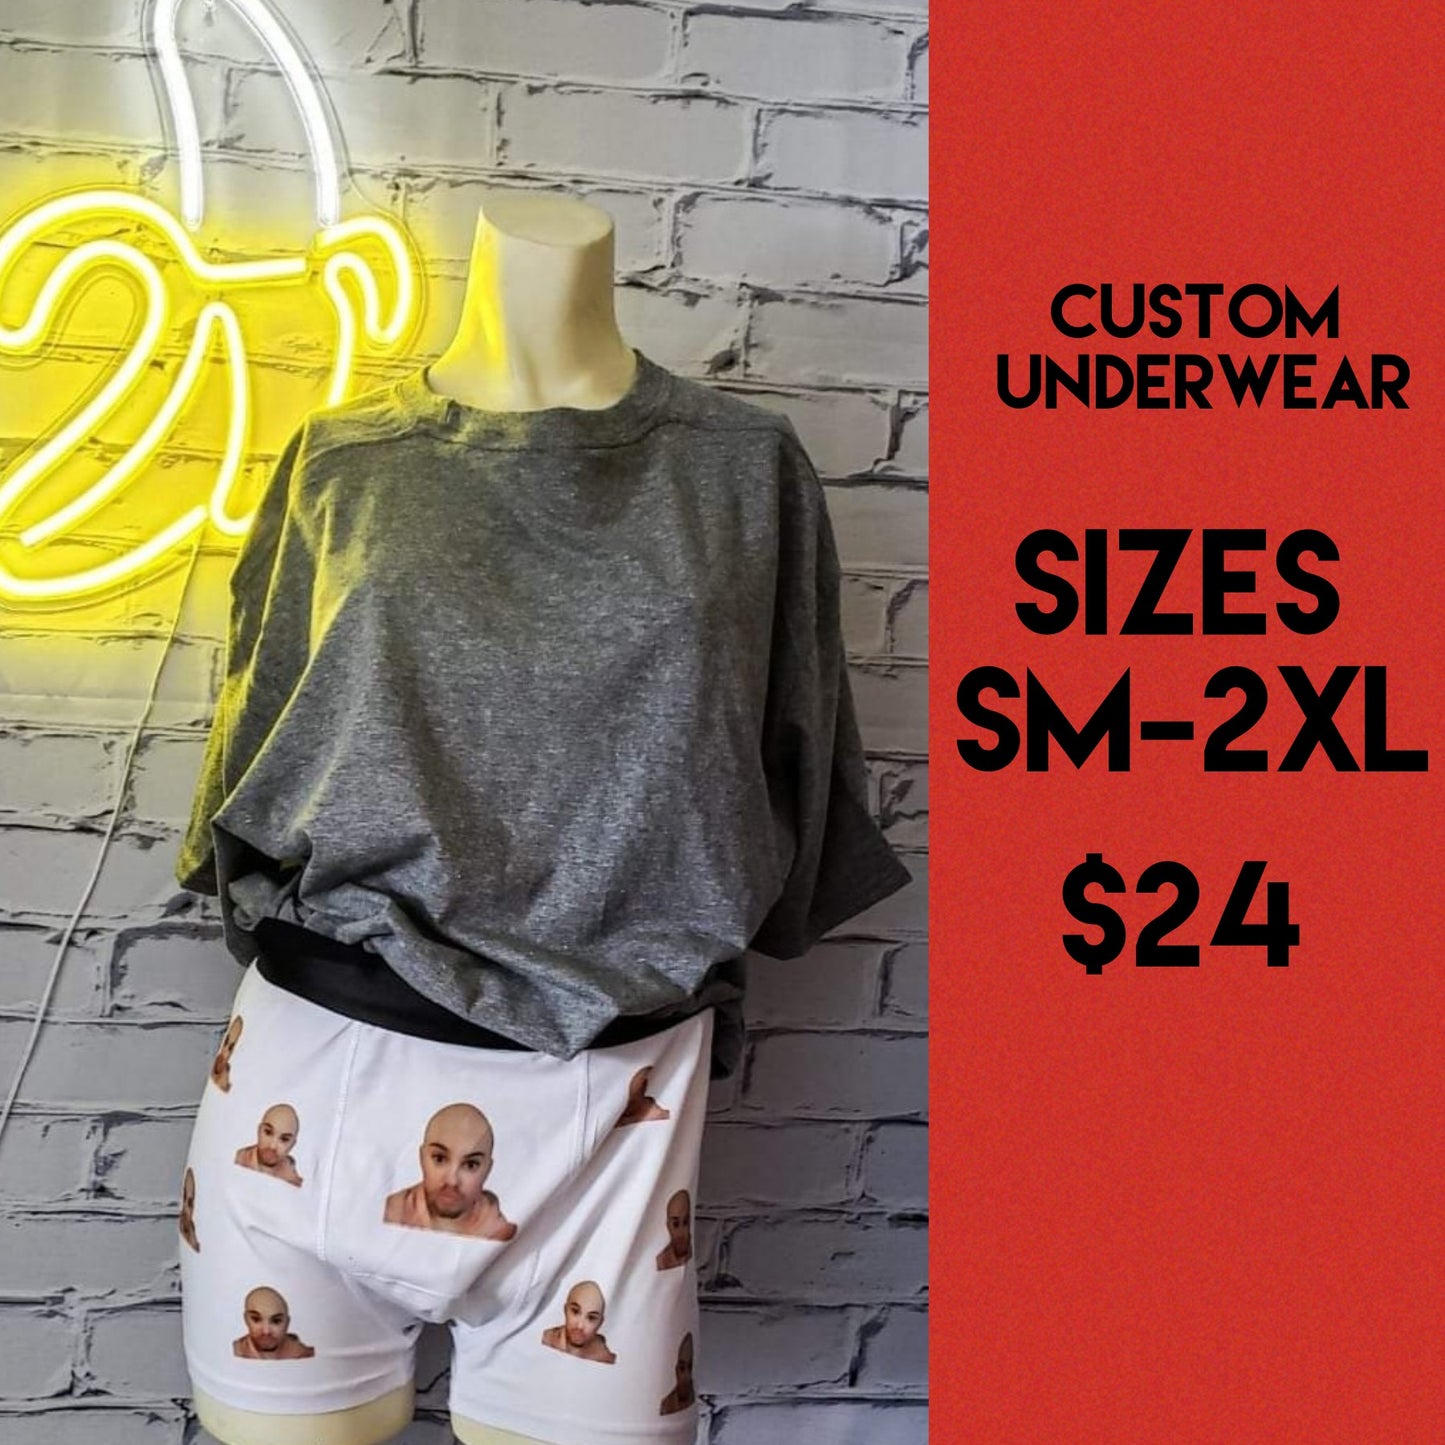 Custom underwear